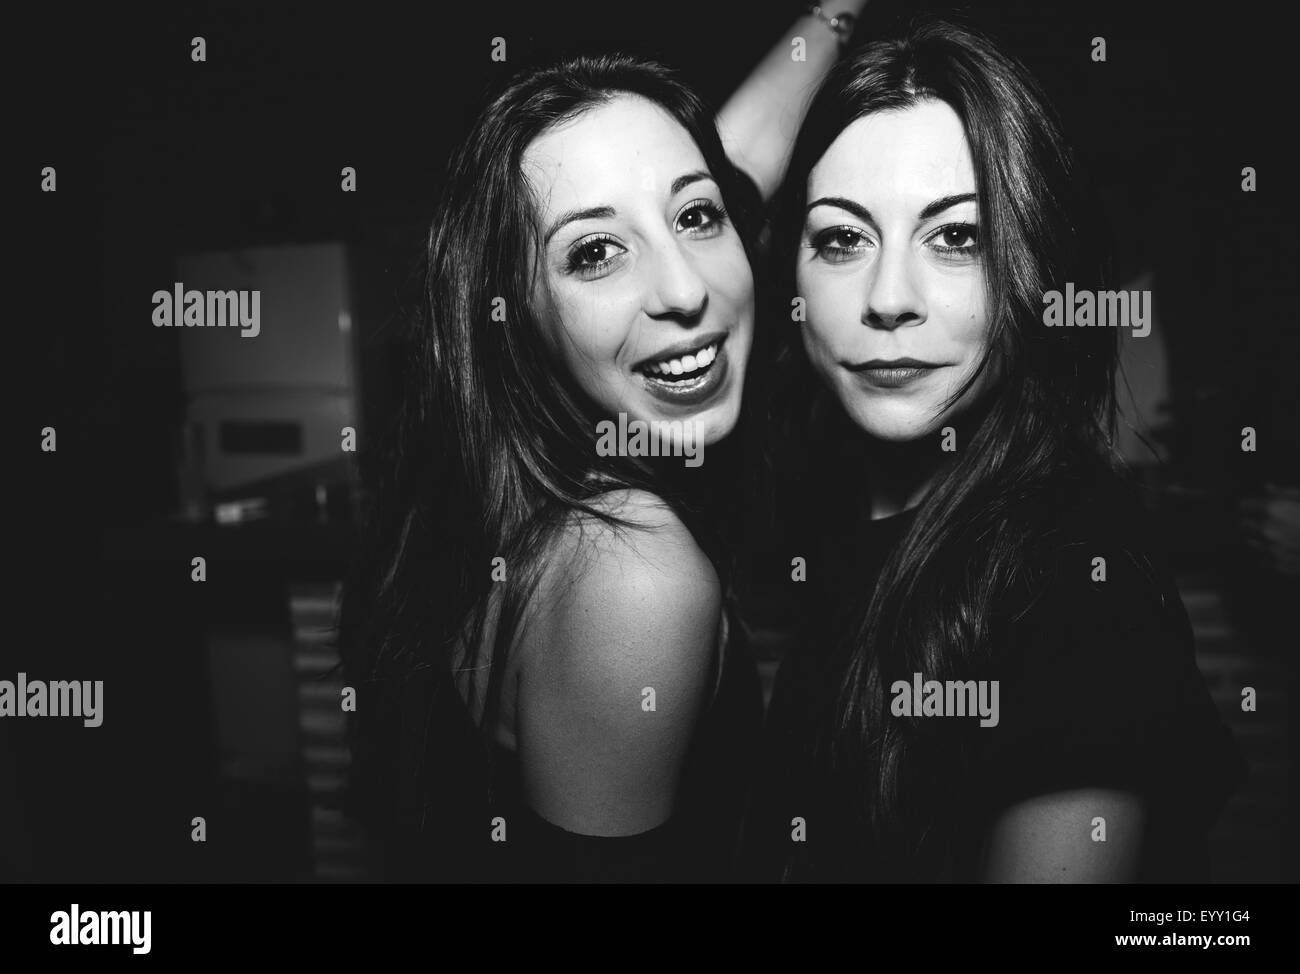 Smiling women dancing in nightclub Banque D'Images